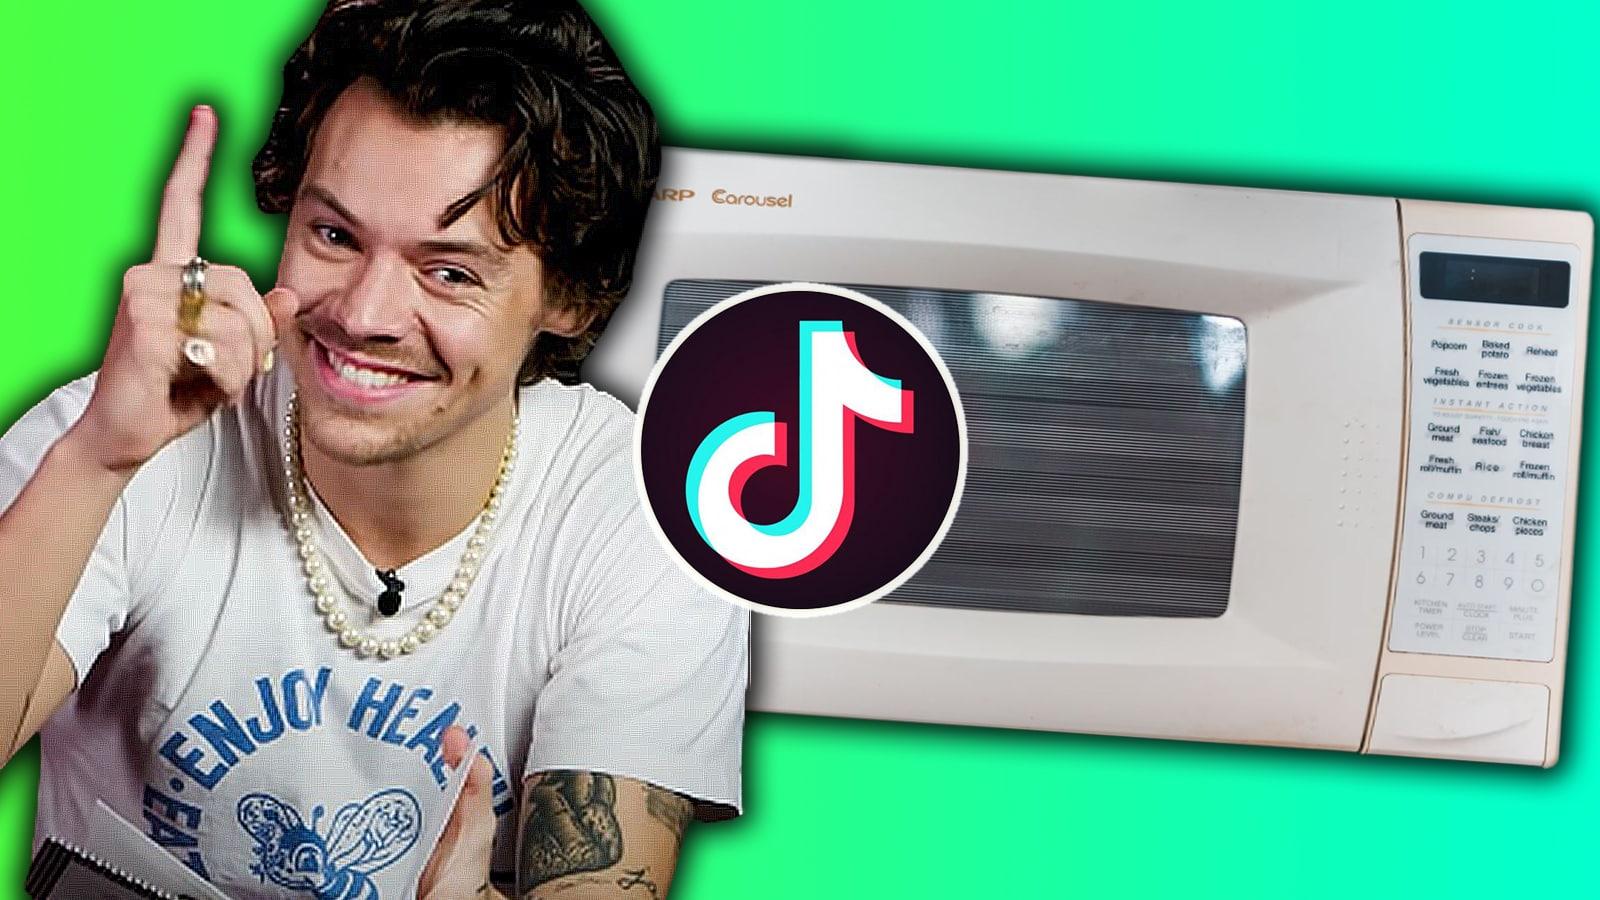 Viral TikTok convinces fans Harry Styles stole microwave